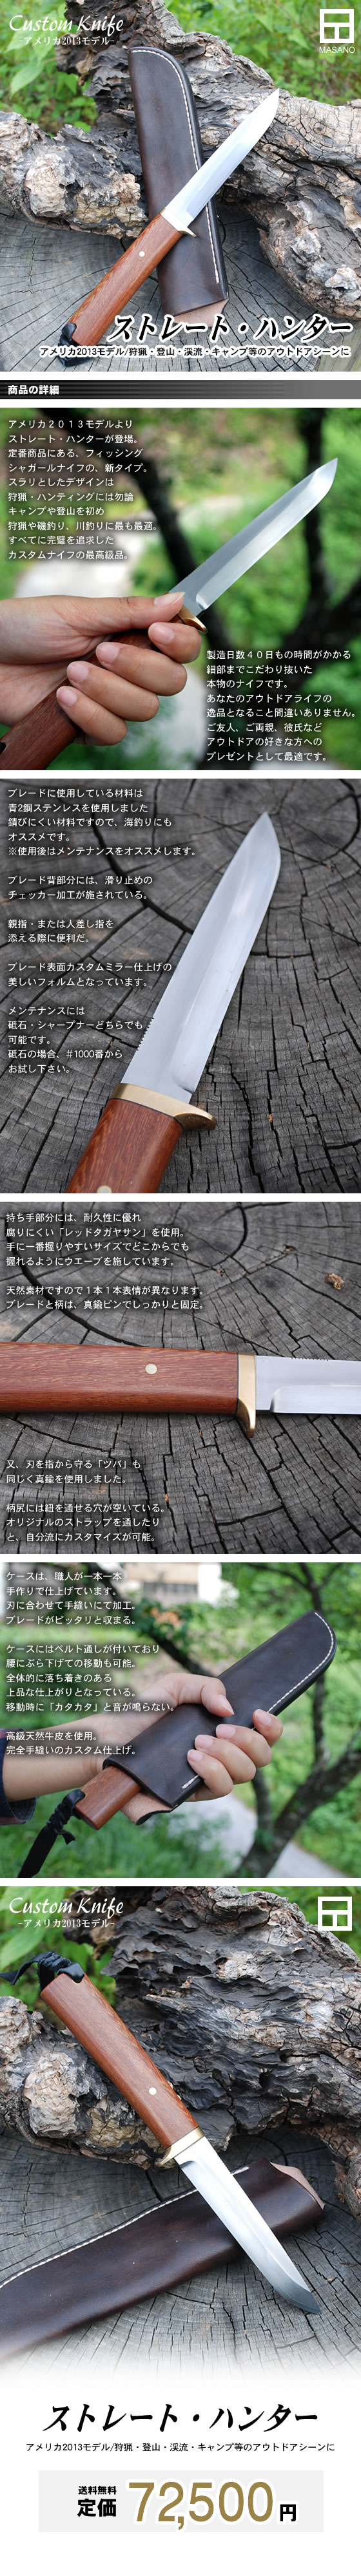 Custom Knife アメリカモデル2013 ストレート・ハンター